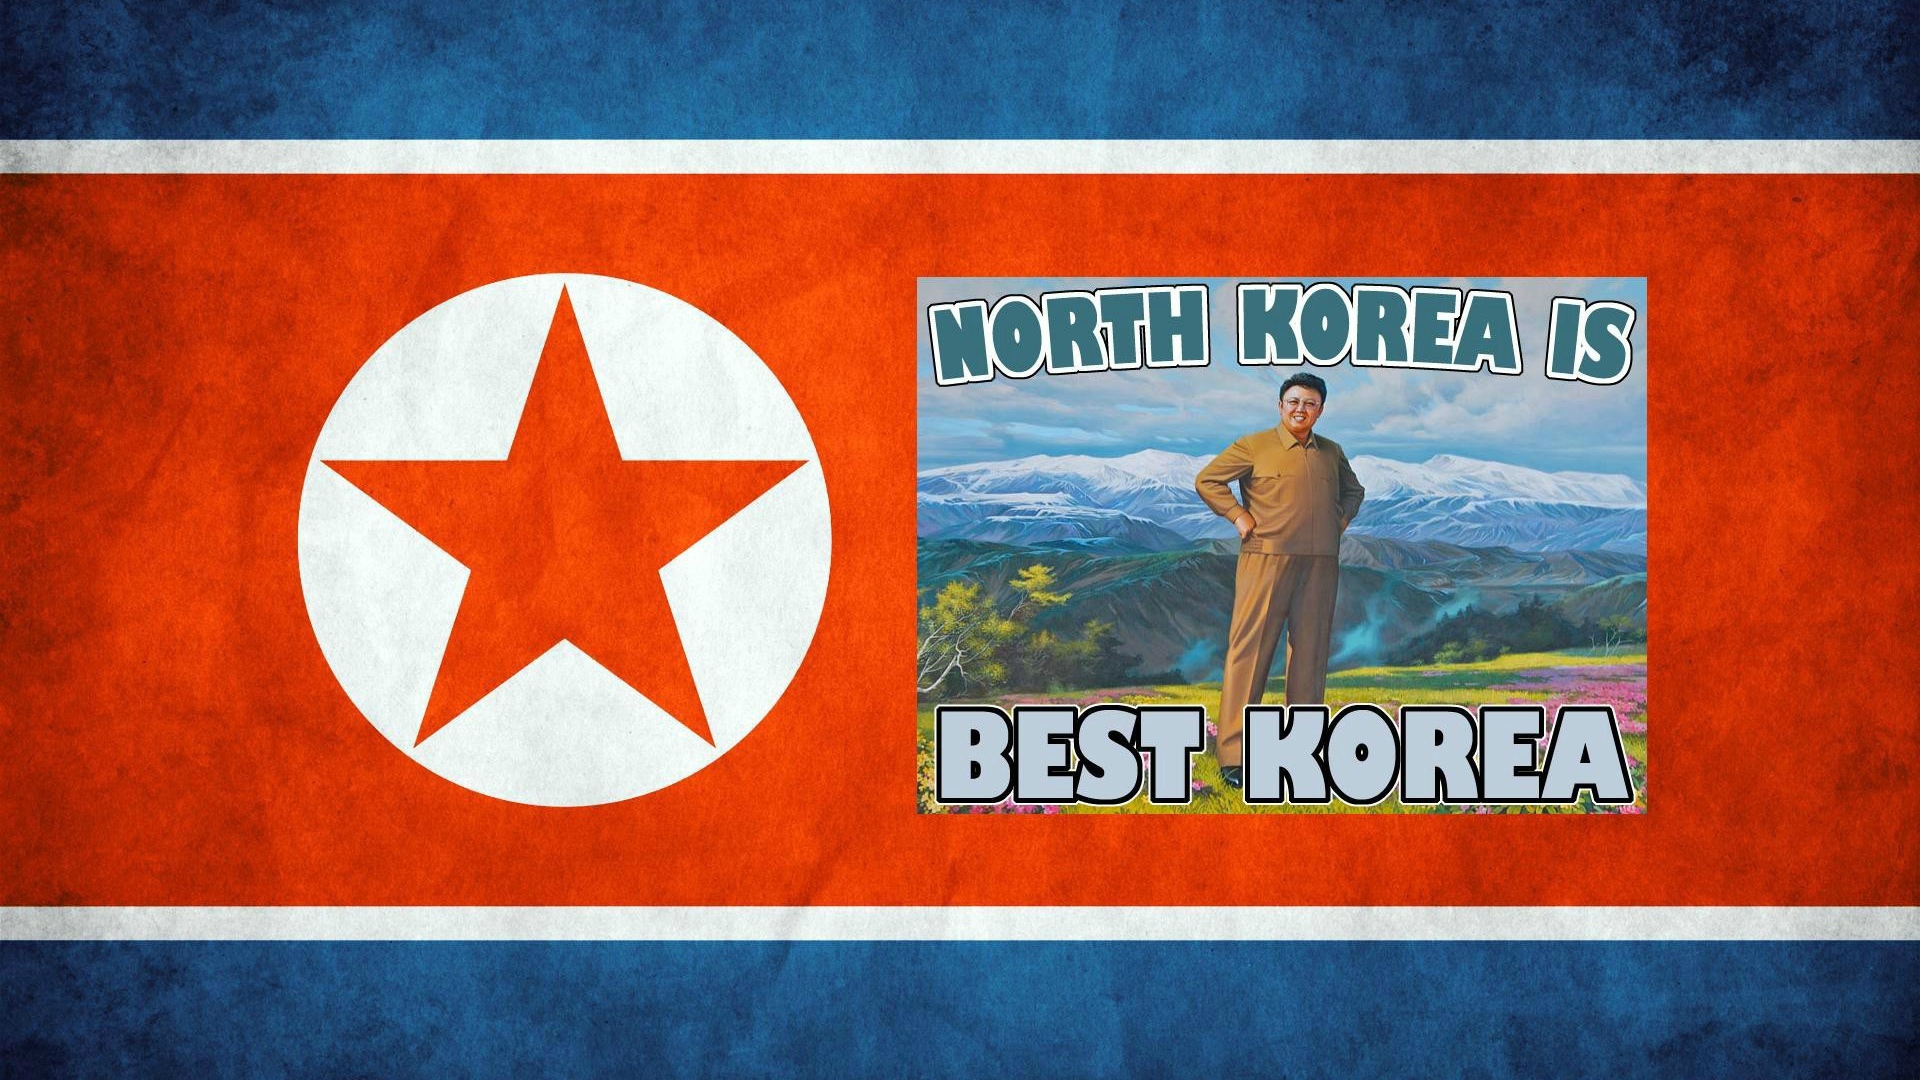 The Best of Korea, North Korea